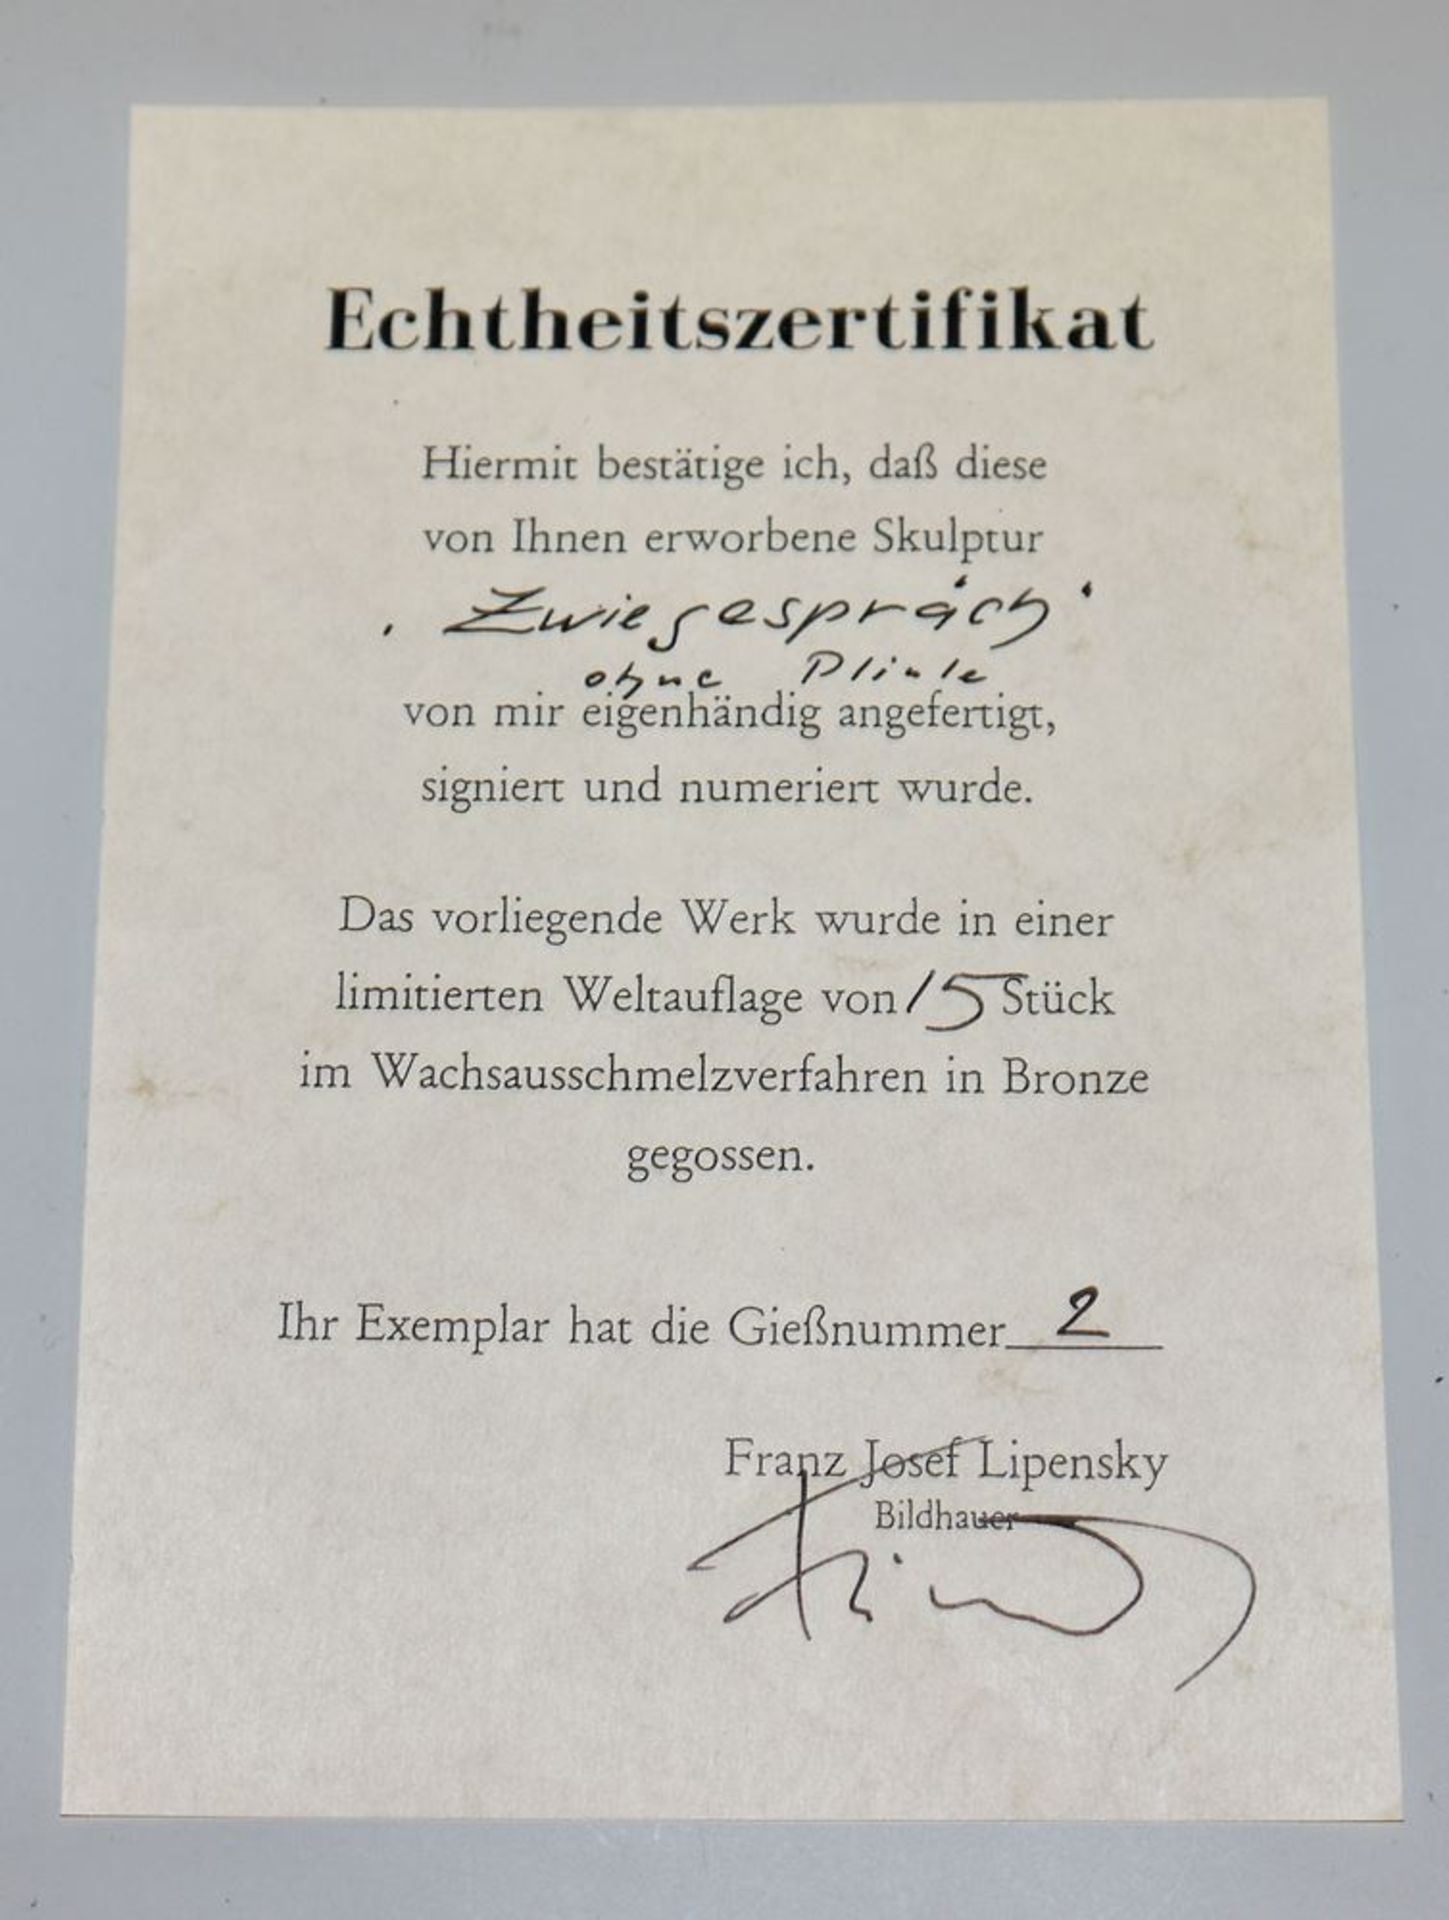 Franz Josef Lipensky, "Zwiegespräch", bronze sculpture, with certificate - Image 2 of 2